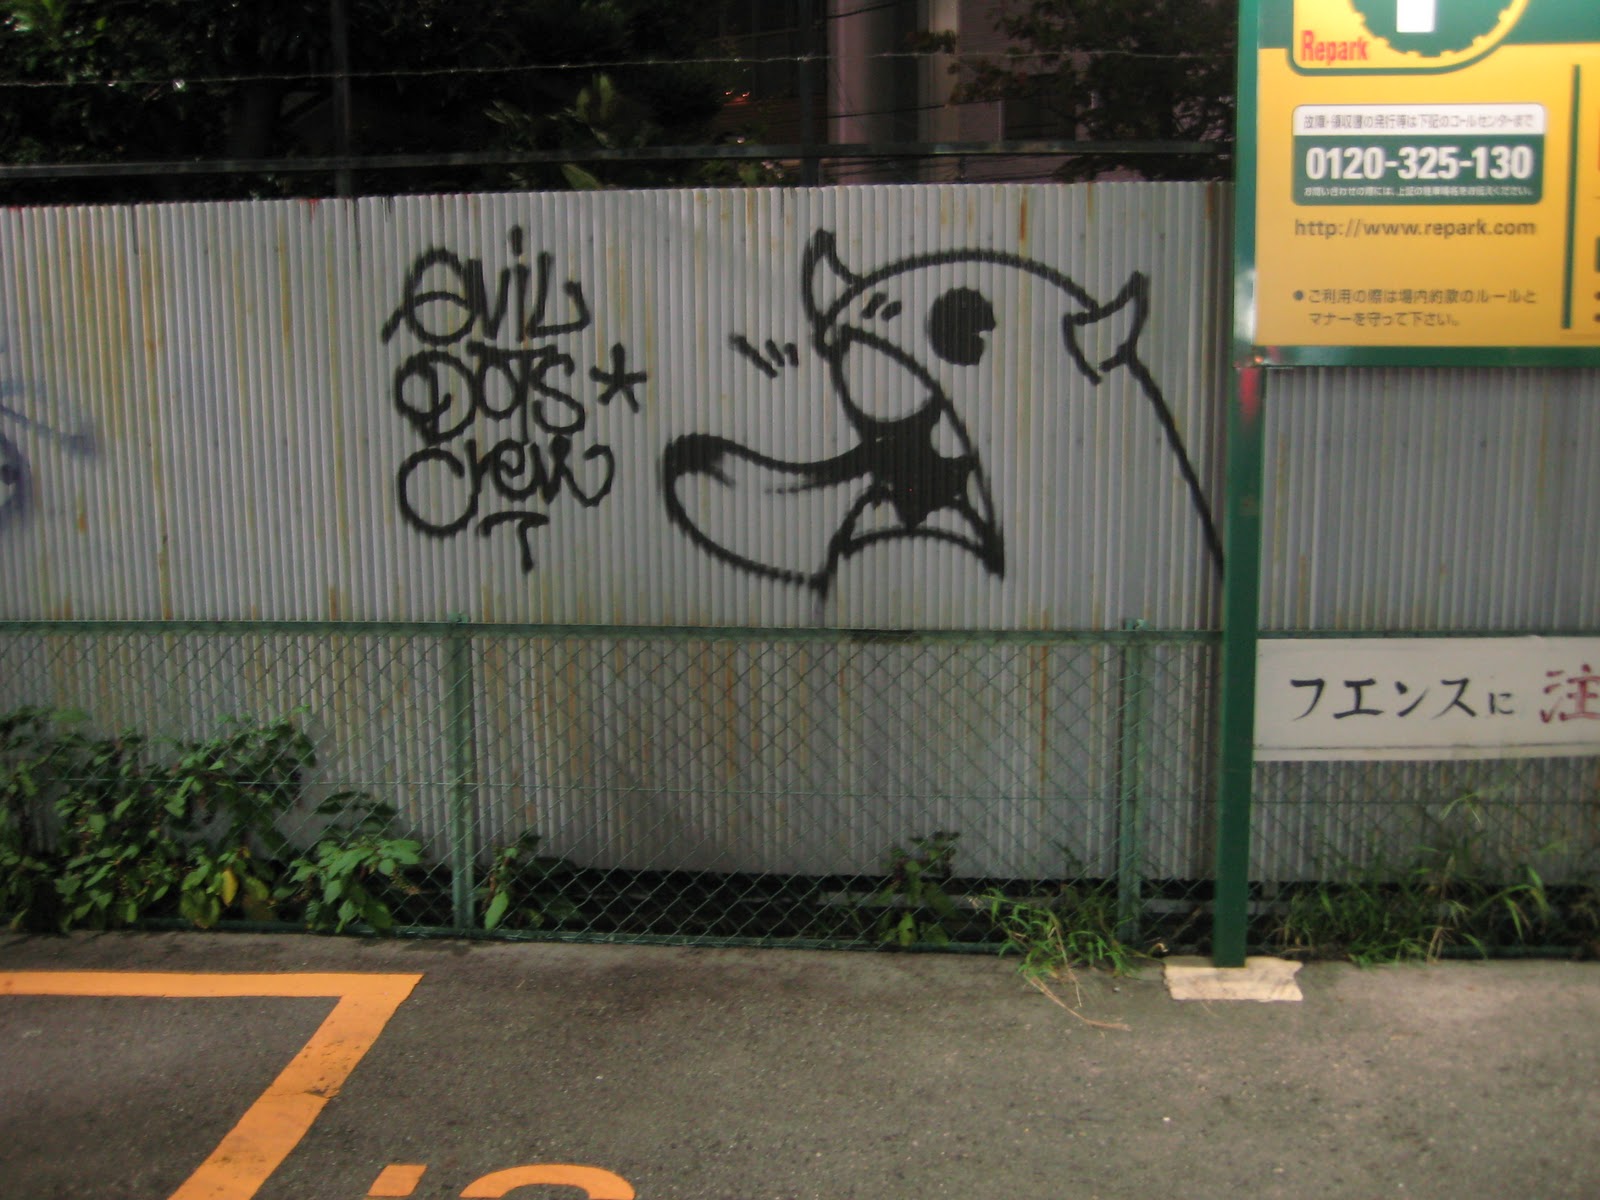 Victoria In Japan Land Japanese Graffiti